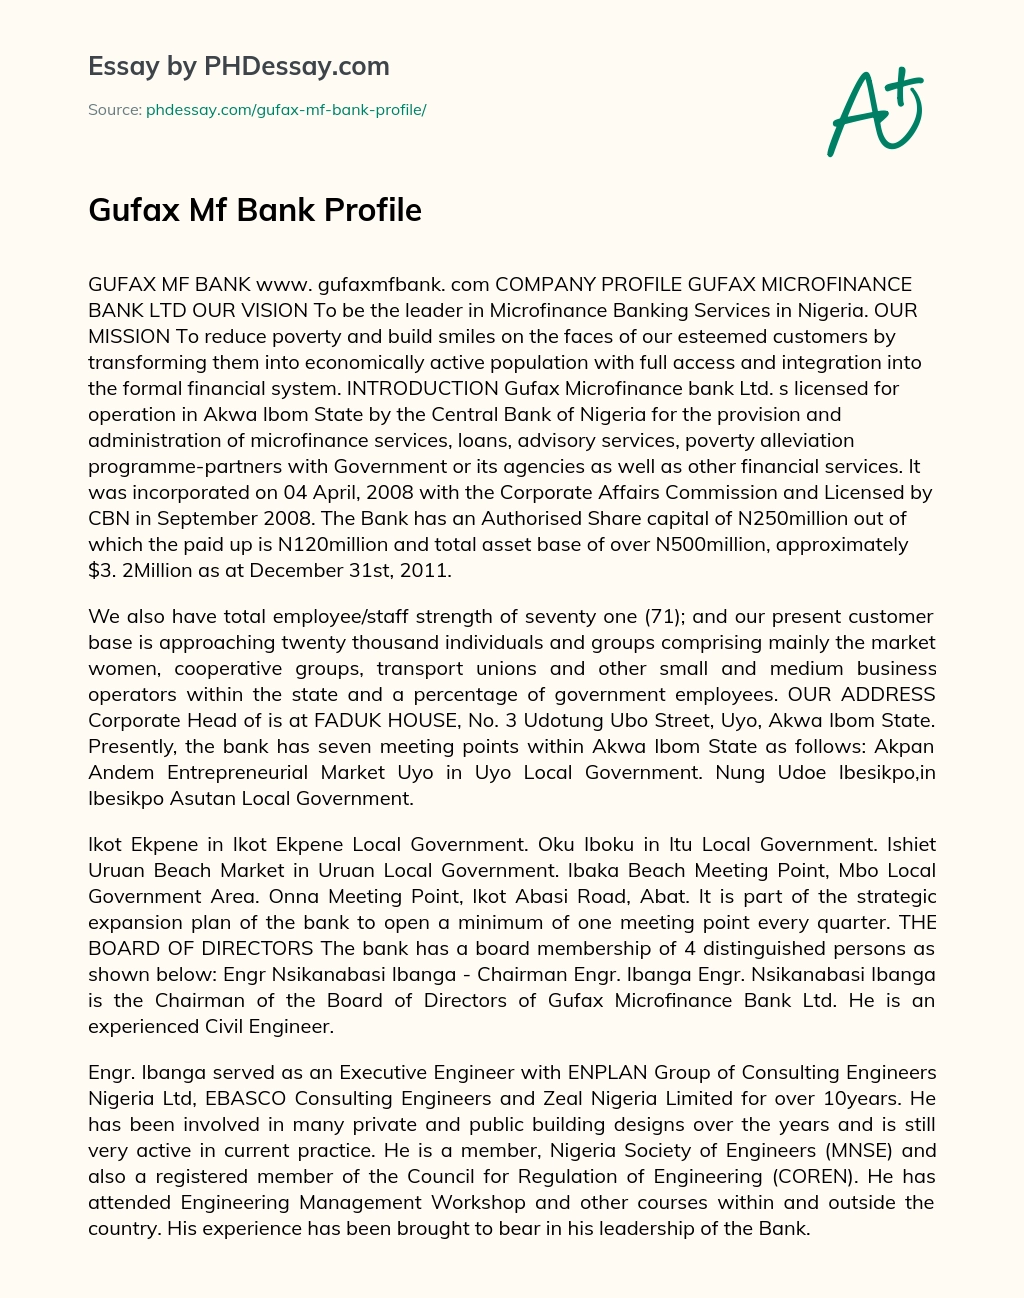 Gufax Mf Bank Profile essay